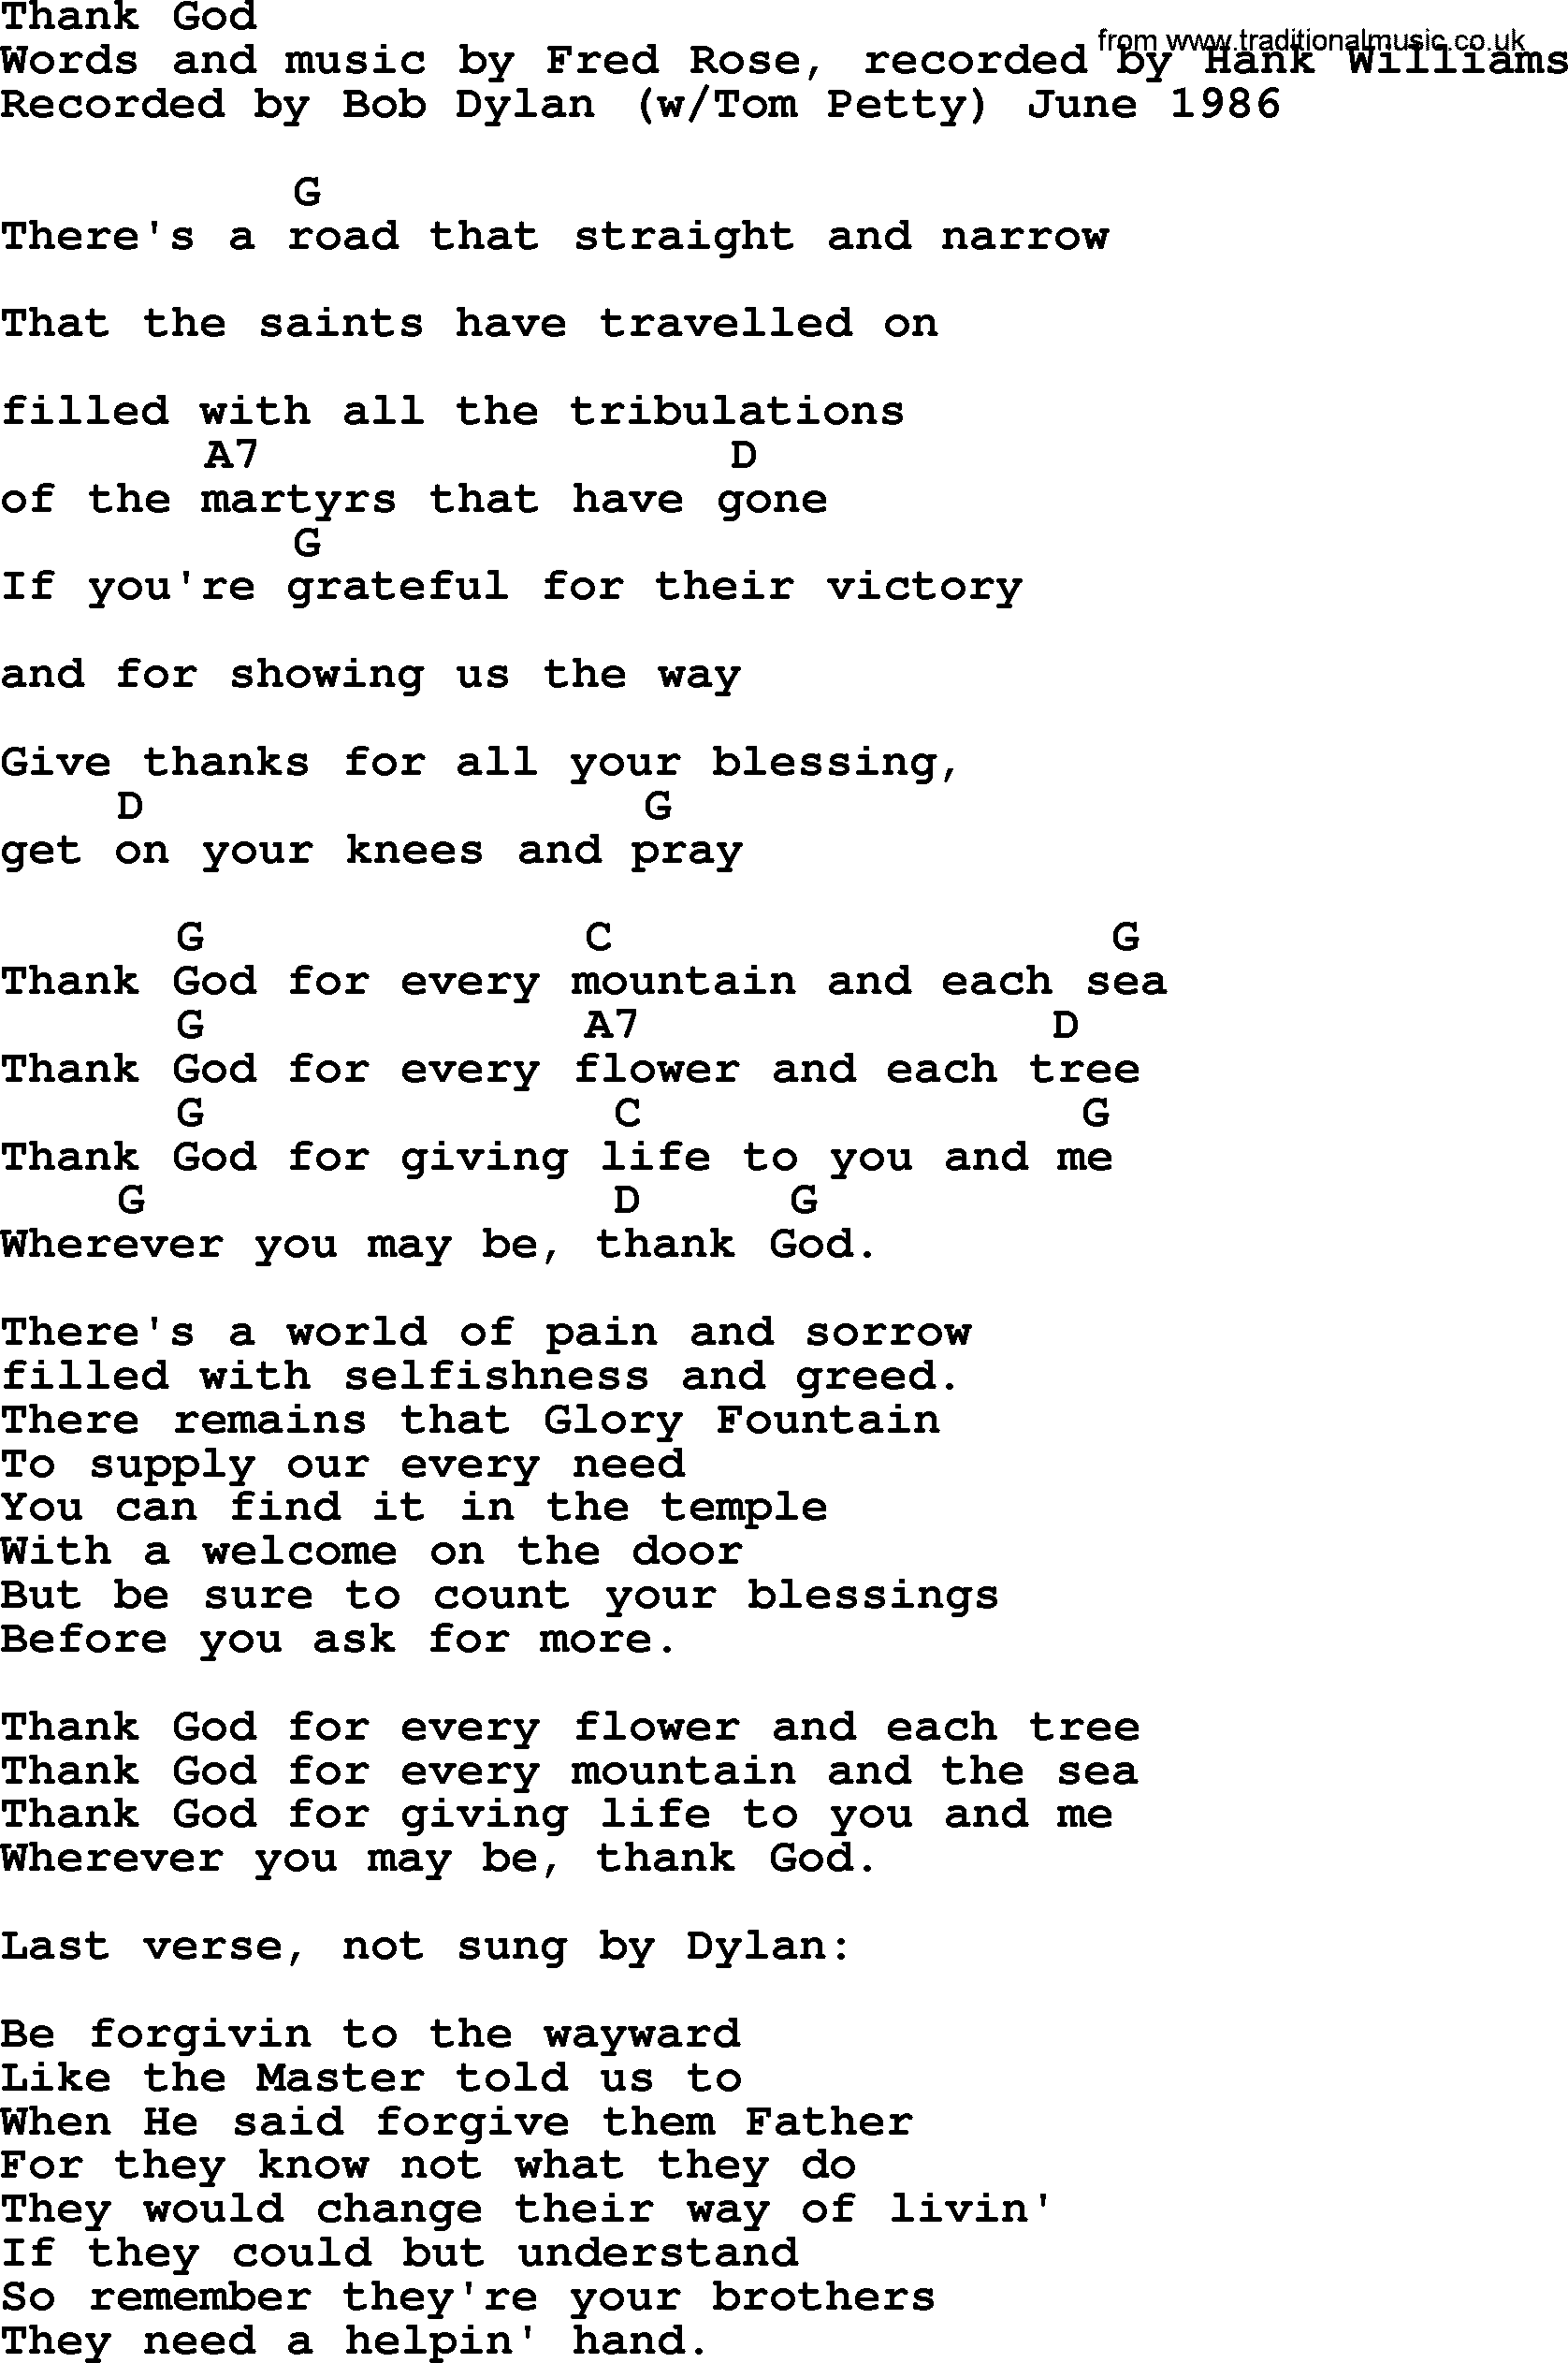 Bob Dylan song, lyrics with chords - Thank God